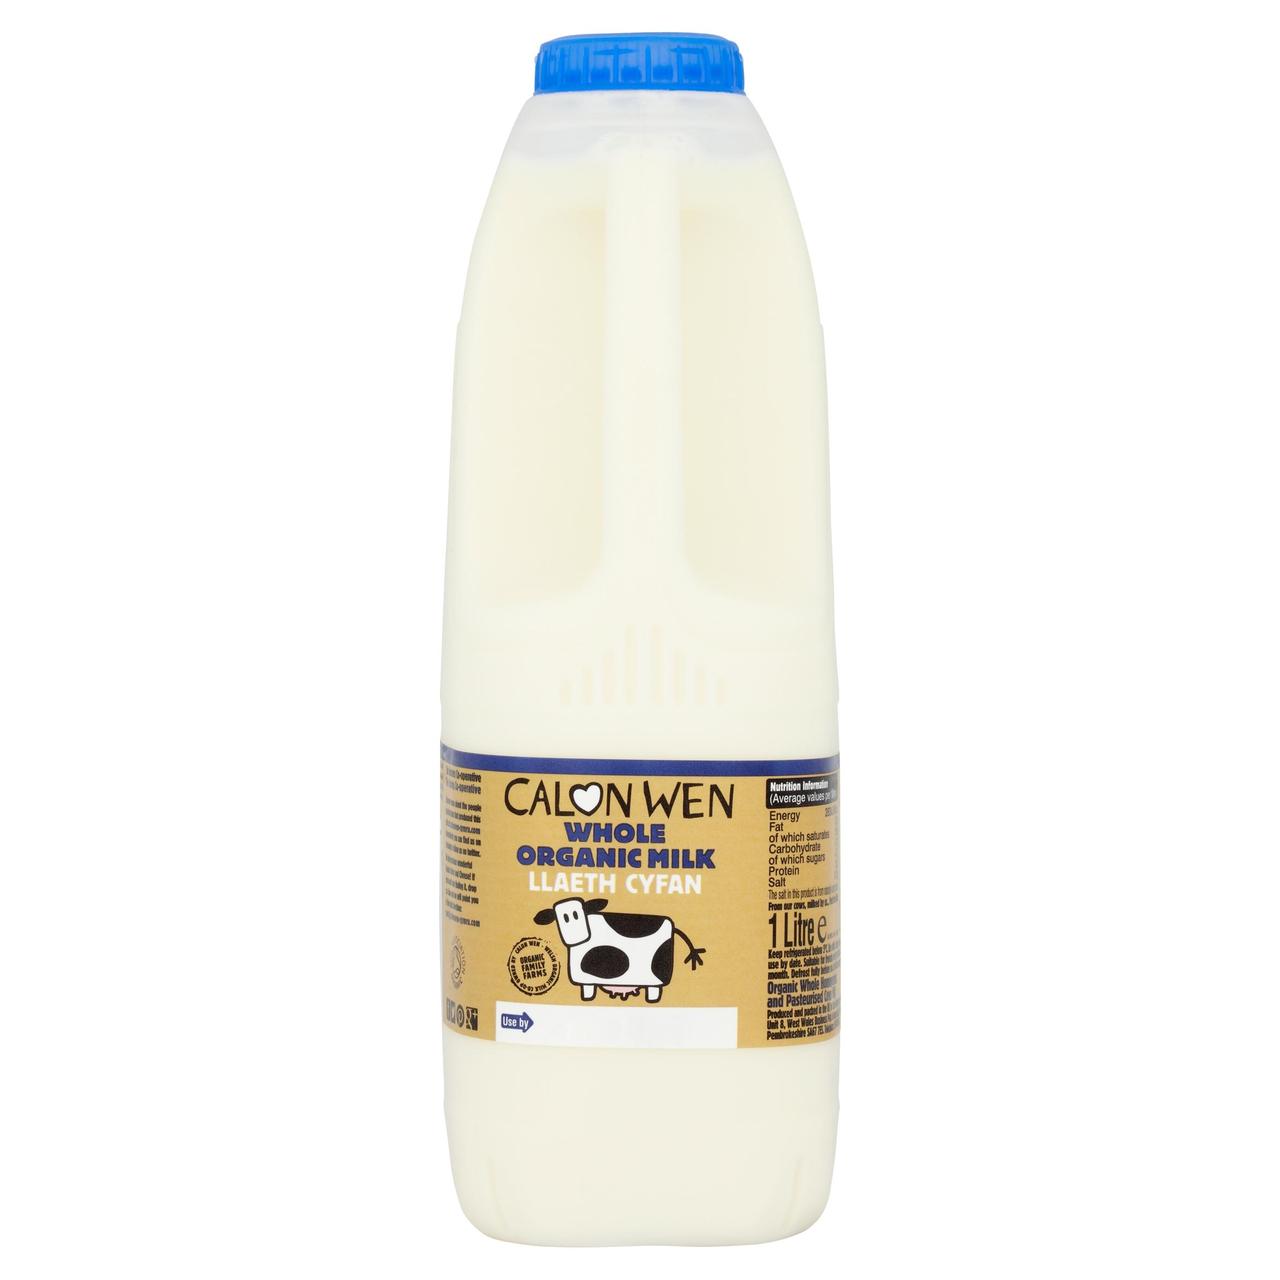 Calon wen organic whole milk 1lt